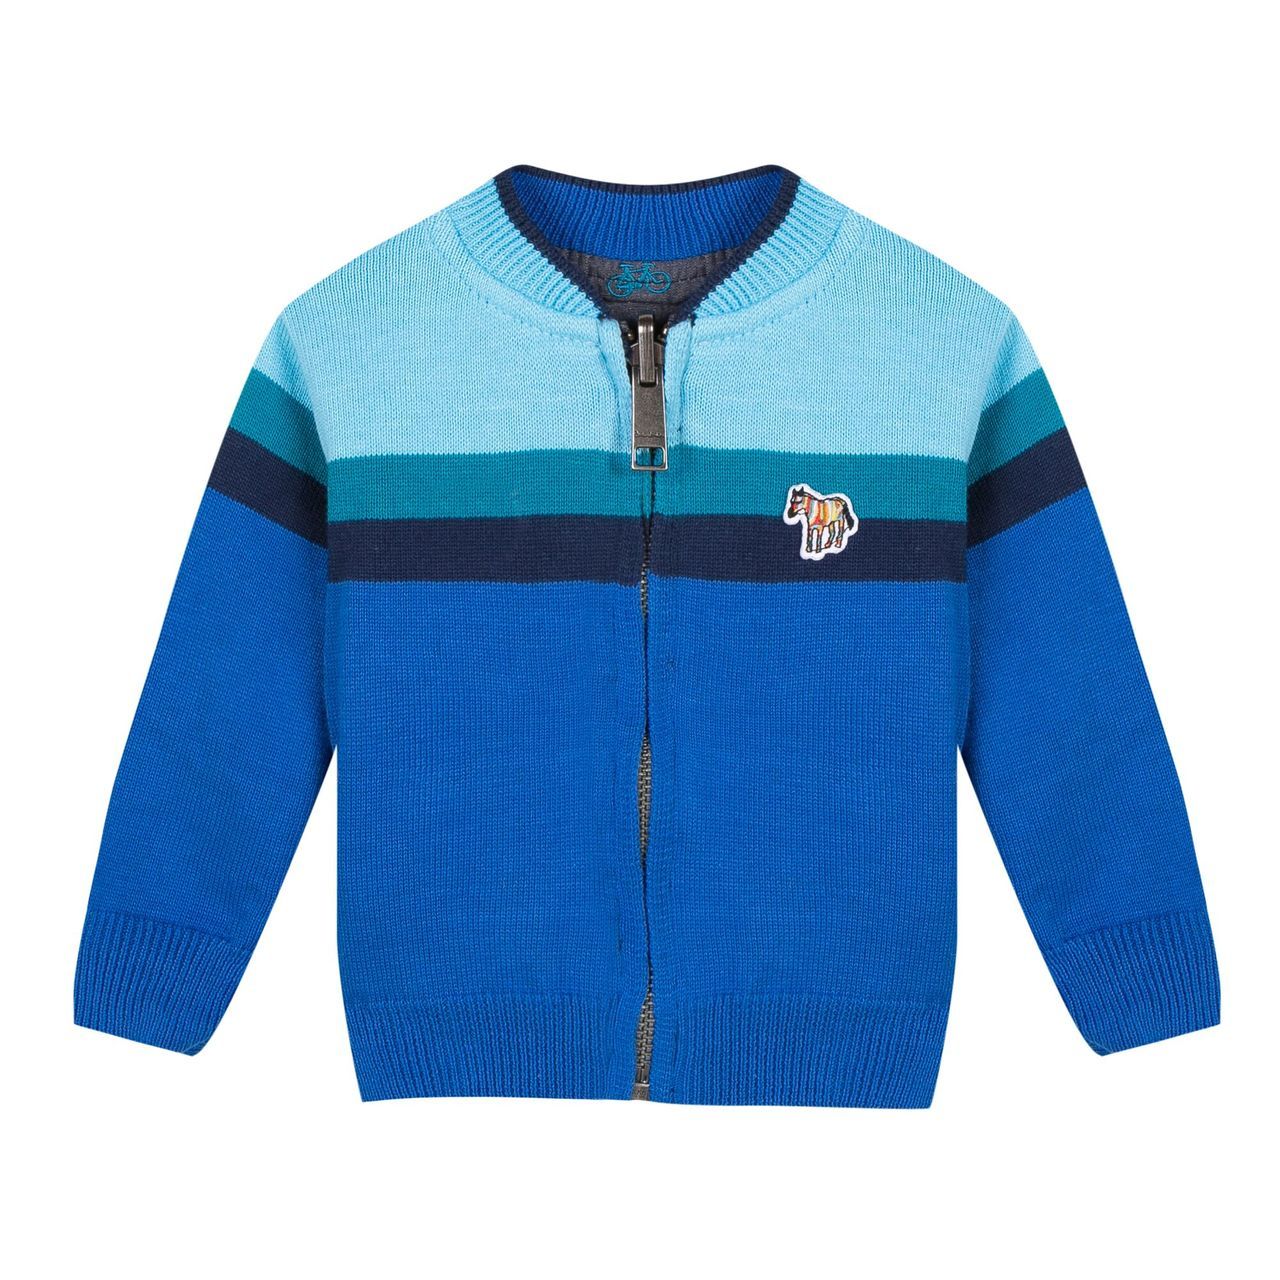 Paul Smith Junior Boy Reversible Sweater Jacket 5L18501 46